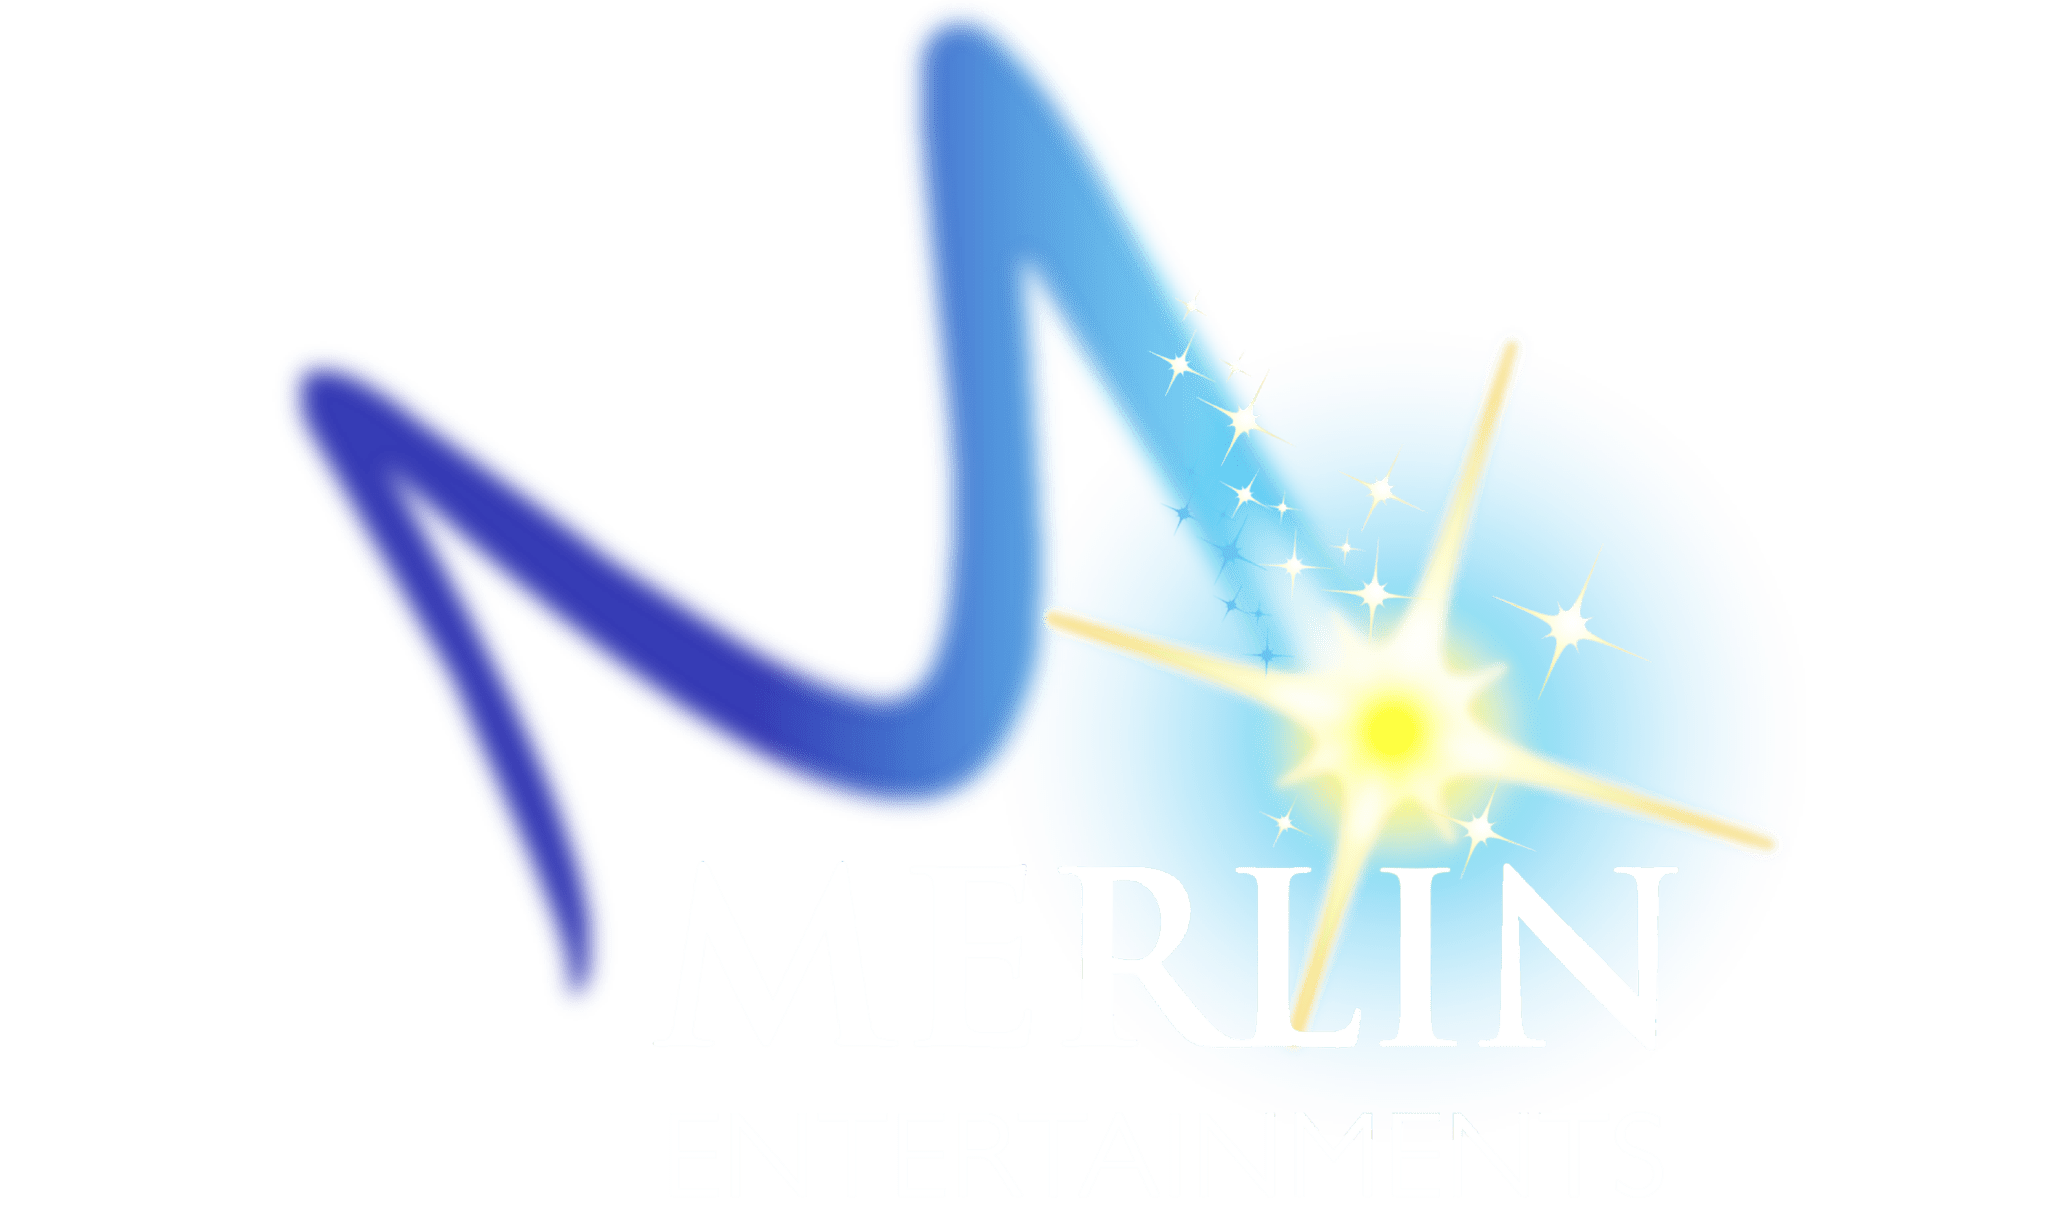 The merlin entertainments logo